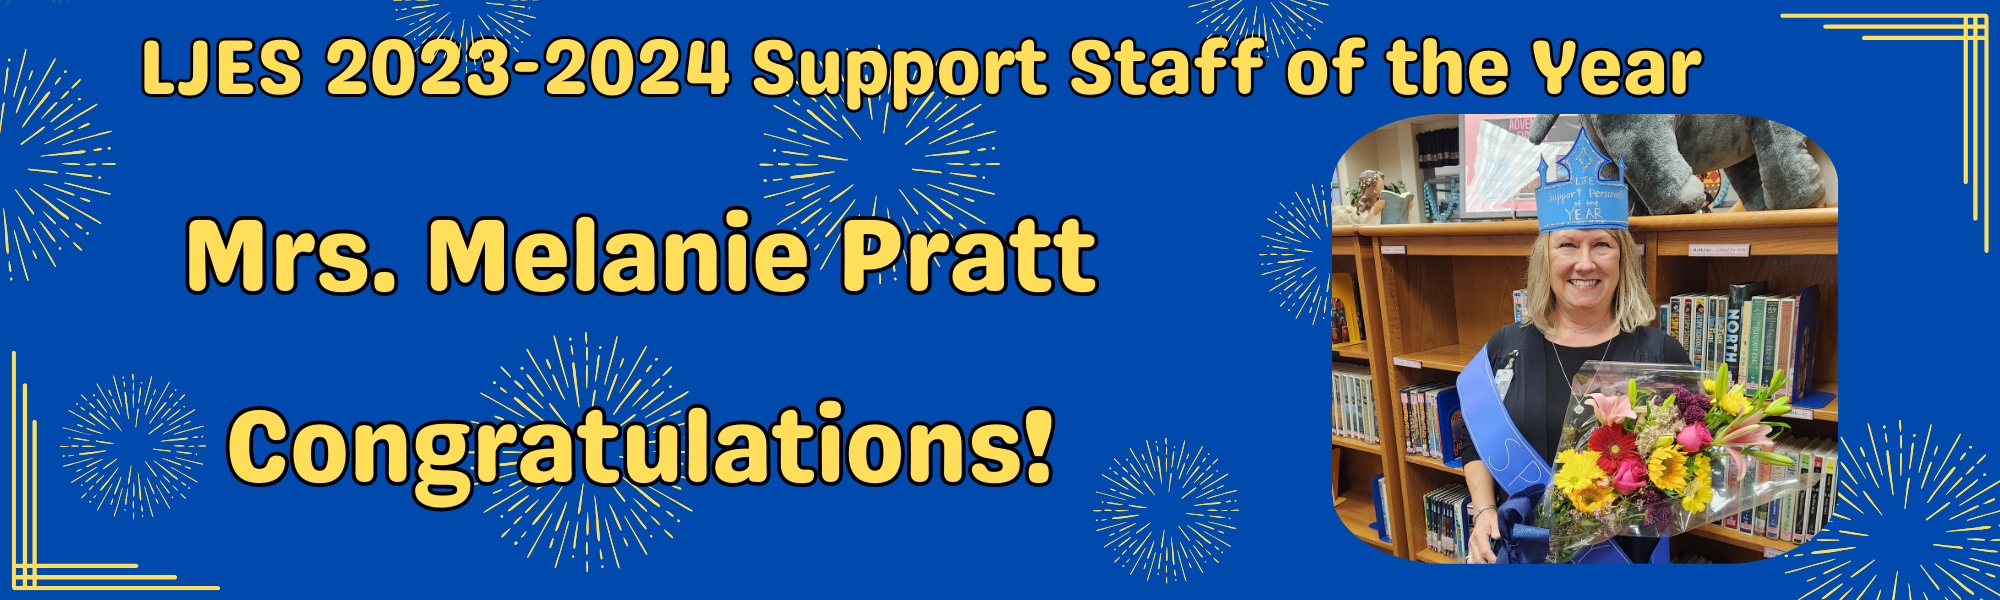 2023-2024 Support Staff of the Year Melanie Pratt